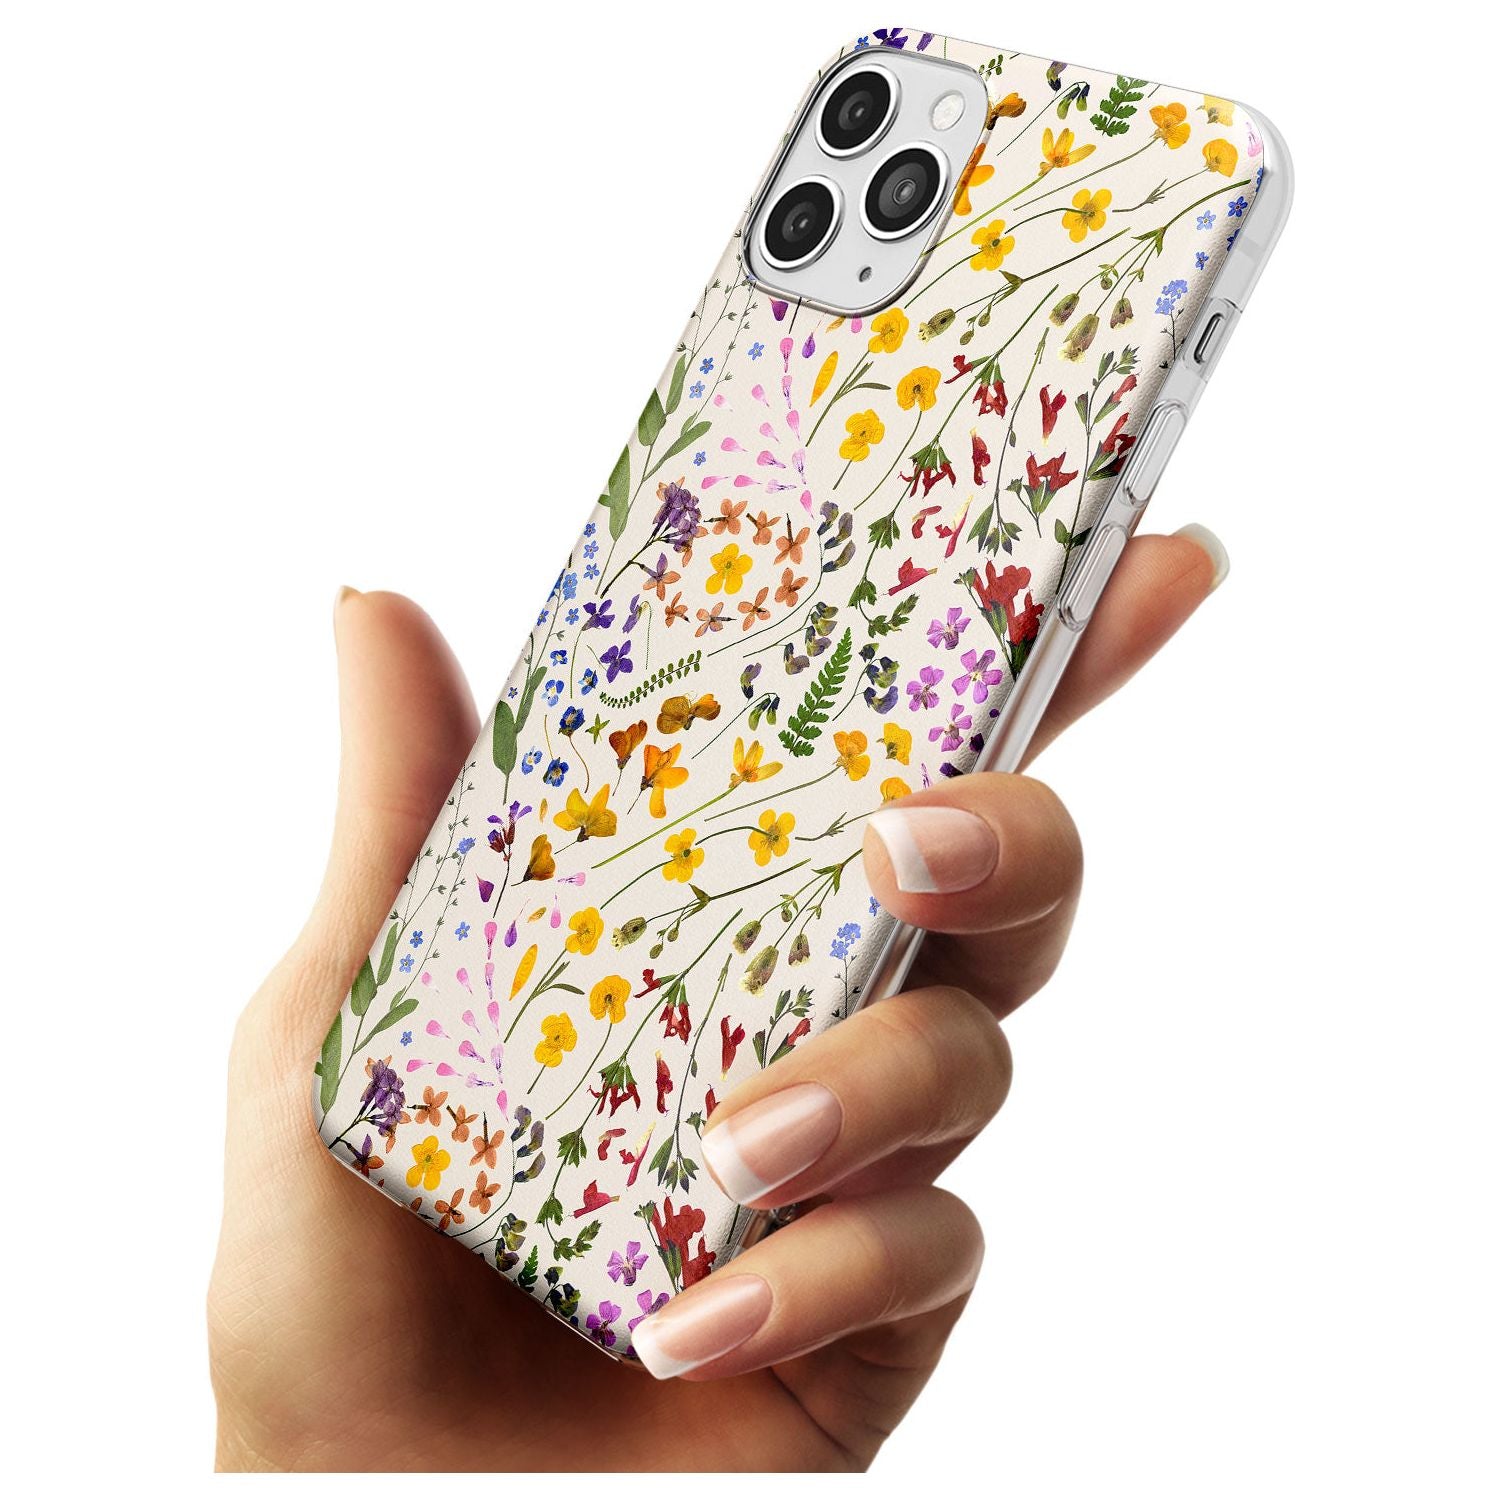 Wildflower & Leaves Cluster Design - Cream Slim TPU Phone Case for iPhone 11 Pro Max